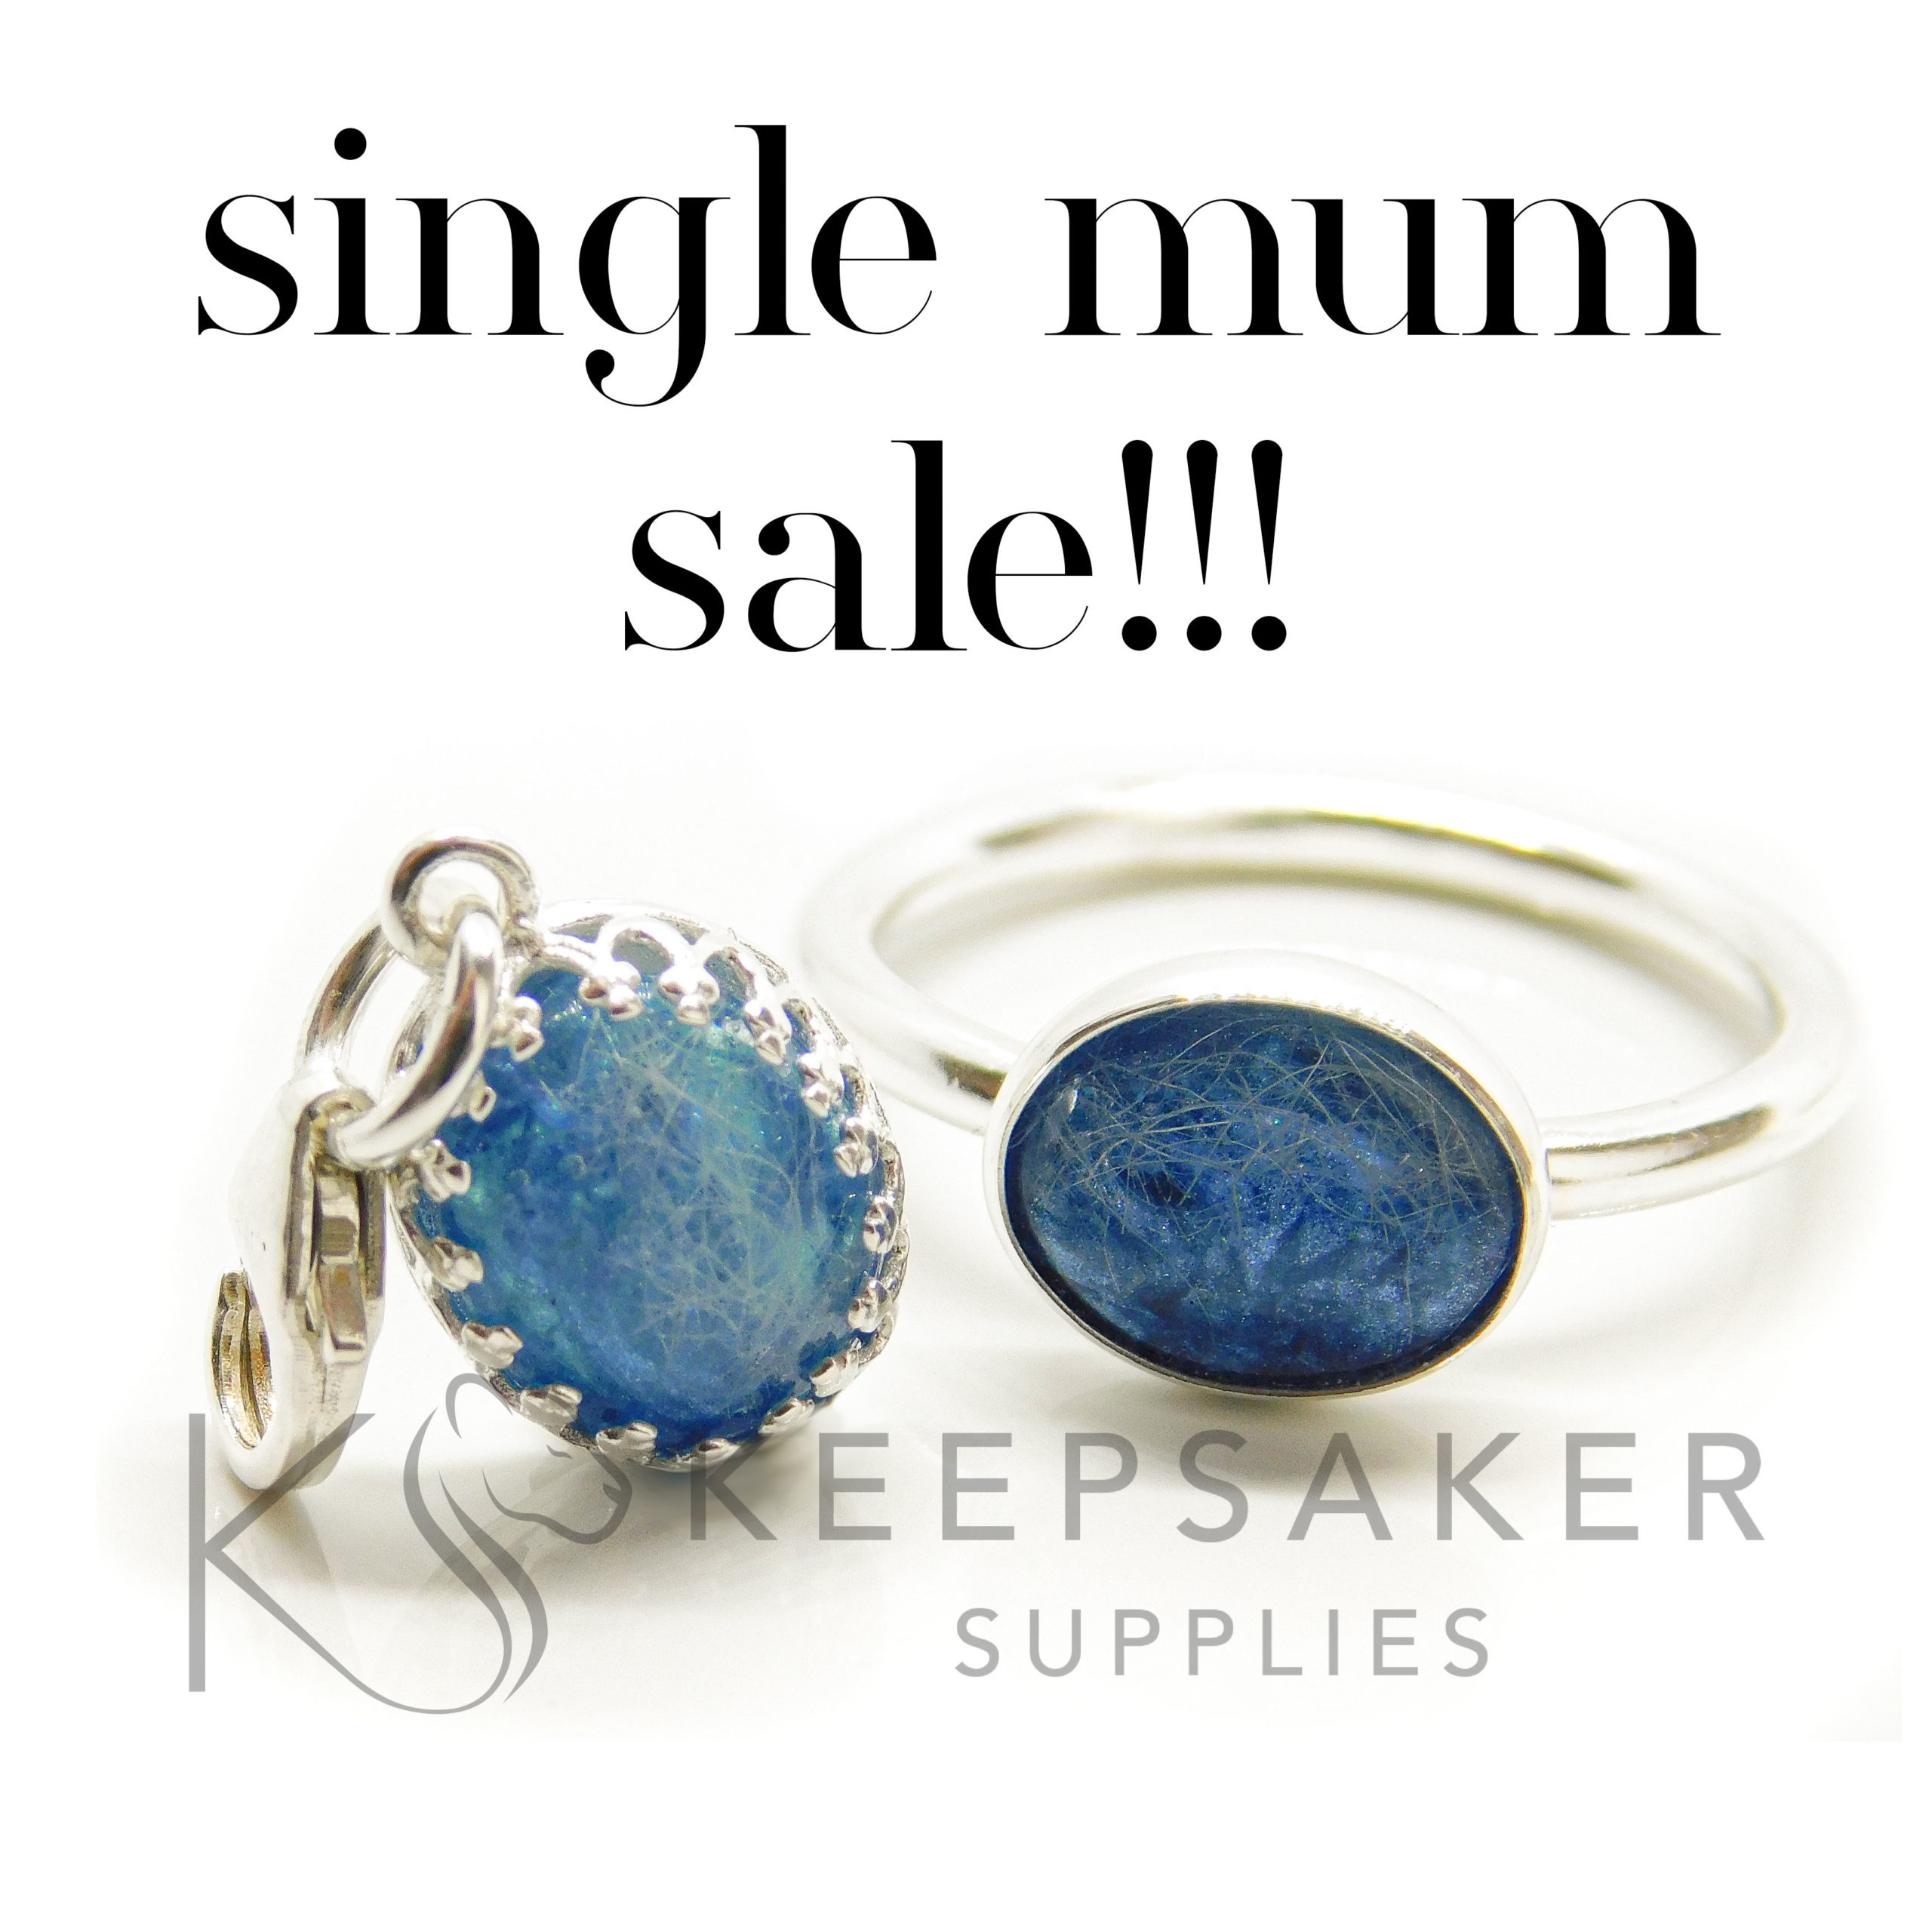 single mum sale solid silver wool keepsake dangle charm and ring, sheep roving fur memento jewellery. Handmade keepsakes with Aegean blue resin sparkle mix